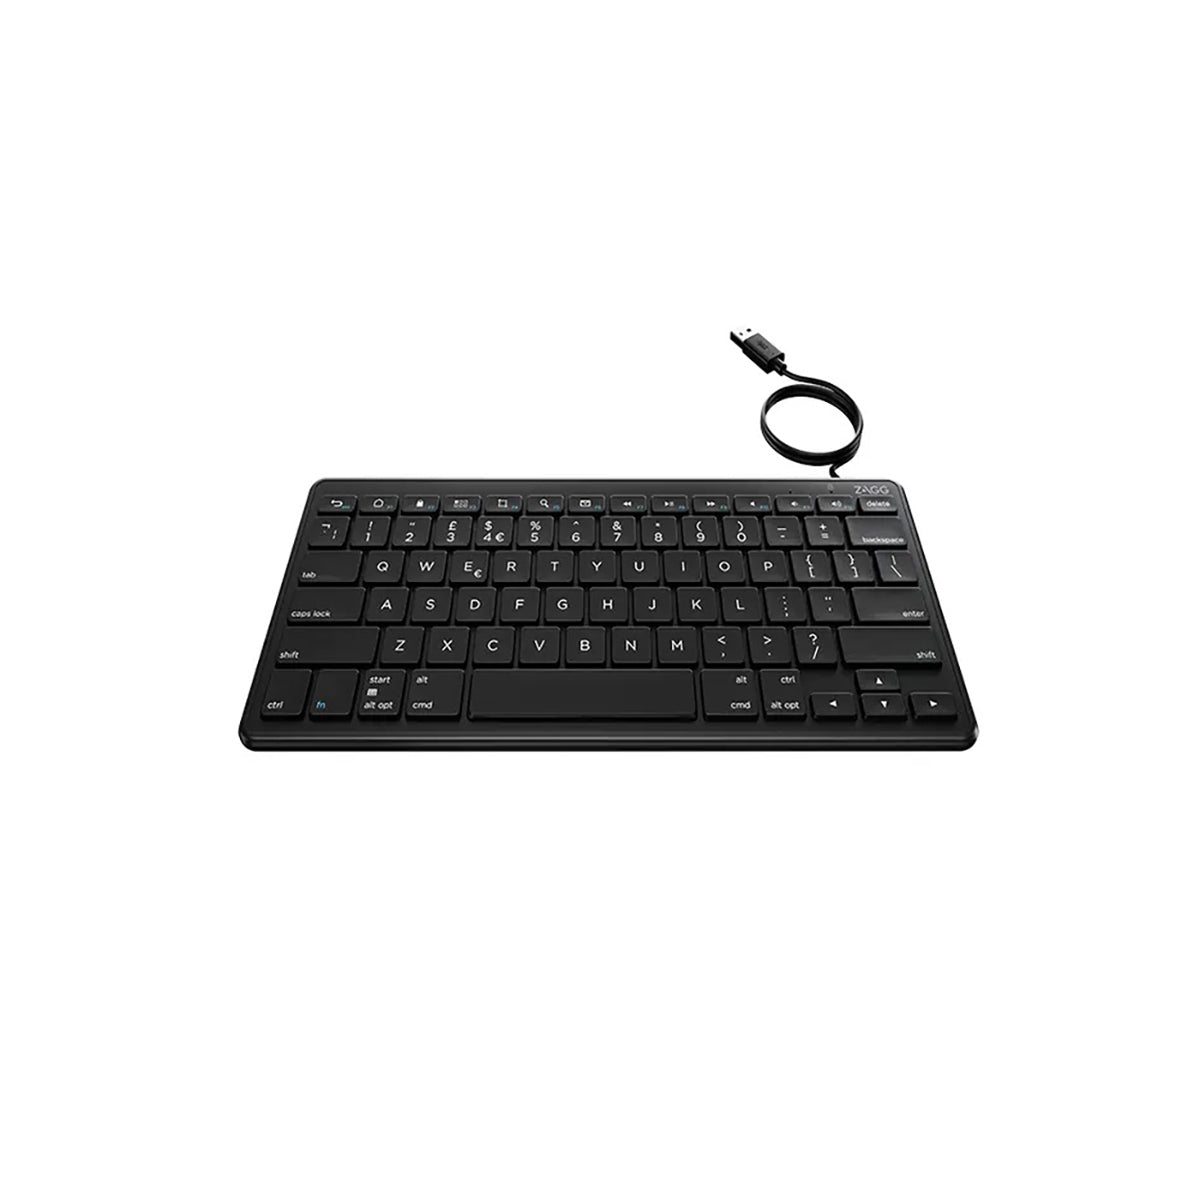 Zagg Wired USB-A Universal Keyboard